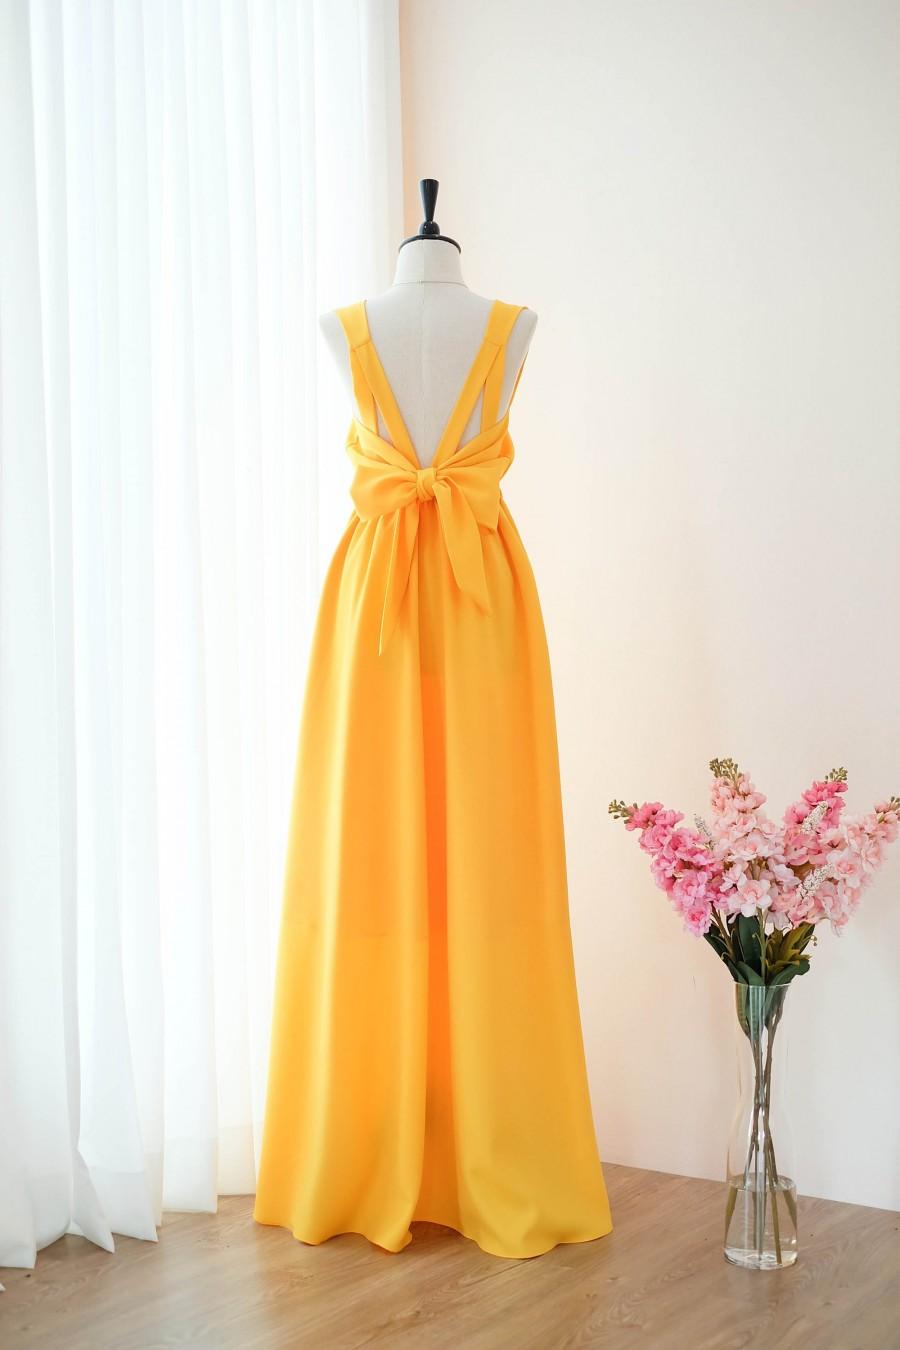 زفاف - Gold yellow dress Long Bridesmaid dress Wedding Dress Long Prom dress Party dress Cocktail dress Maxi dress Evening Gown